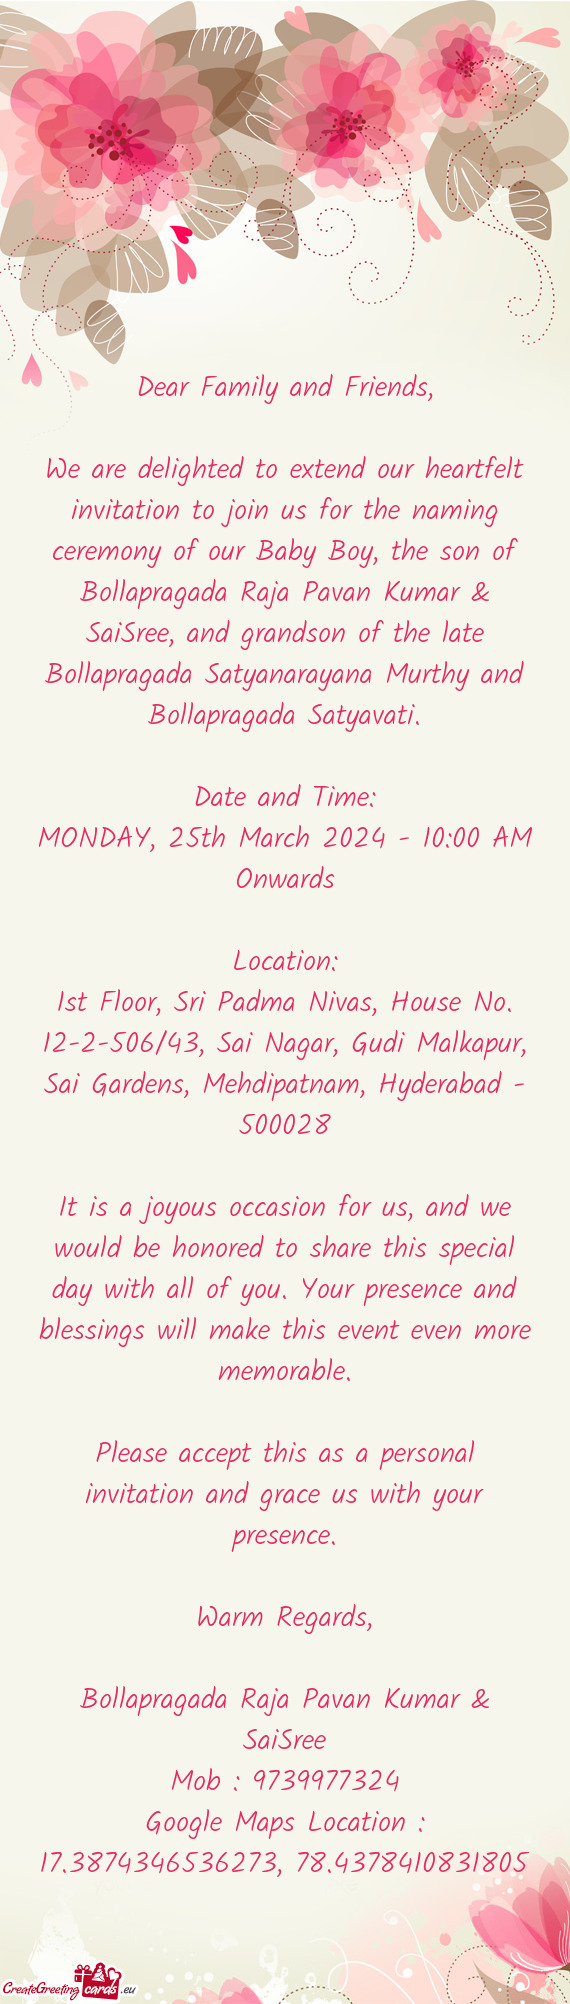 1st Floor, Sri Padma Nivas, House No. 12-2-506/43, Sai Nagar, Gudi Malkapur, Sai Gardens, Mehdipatna